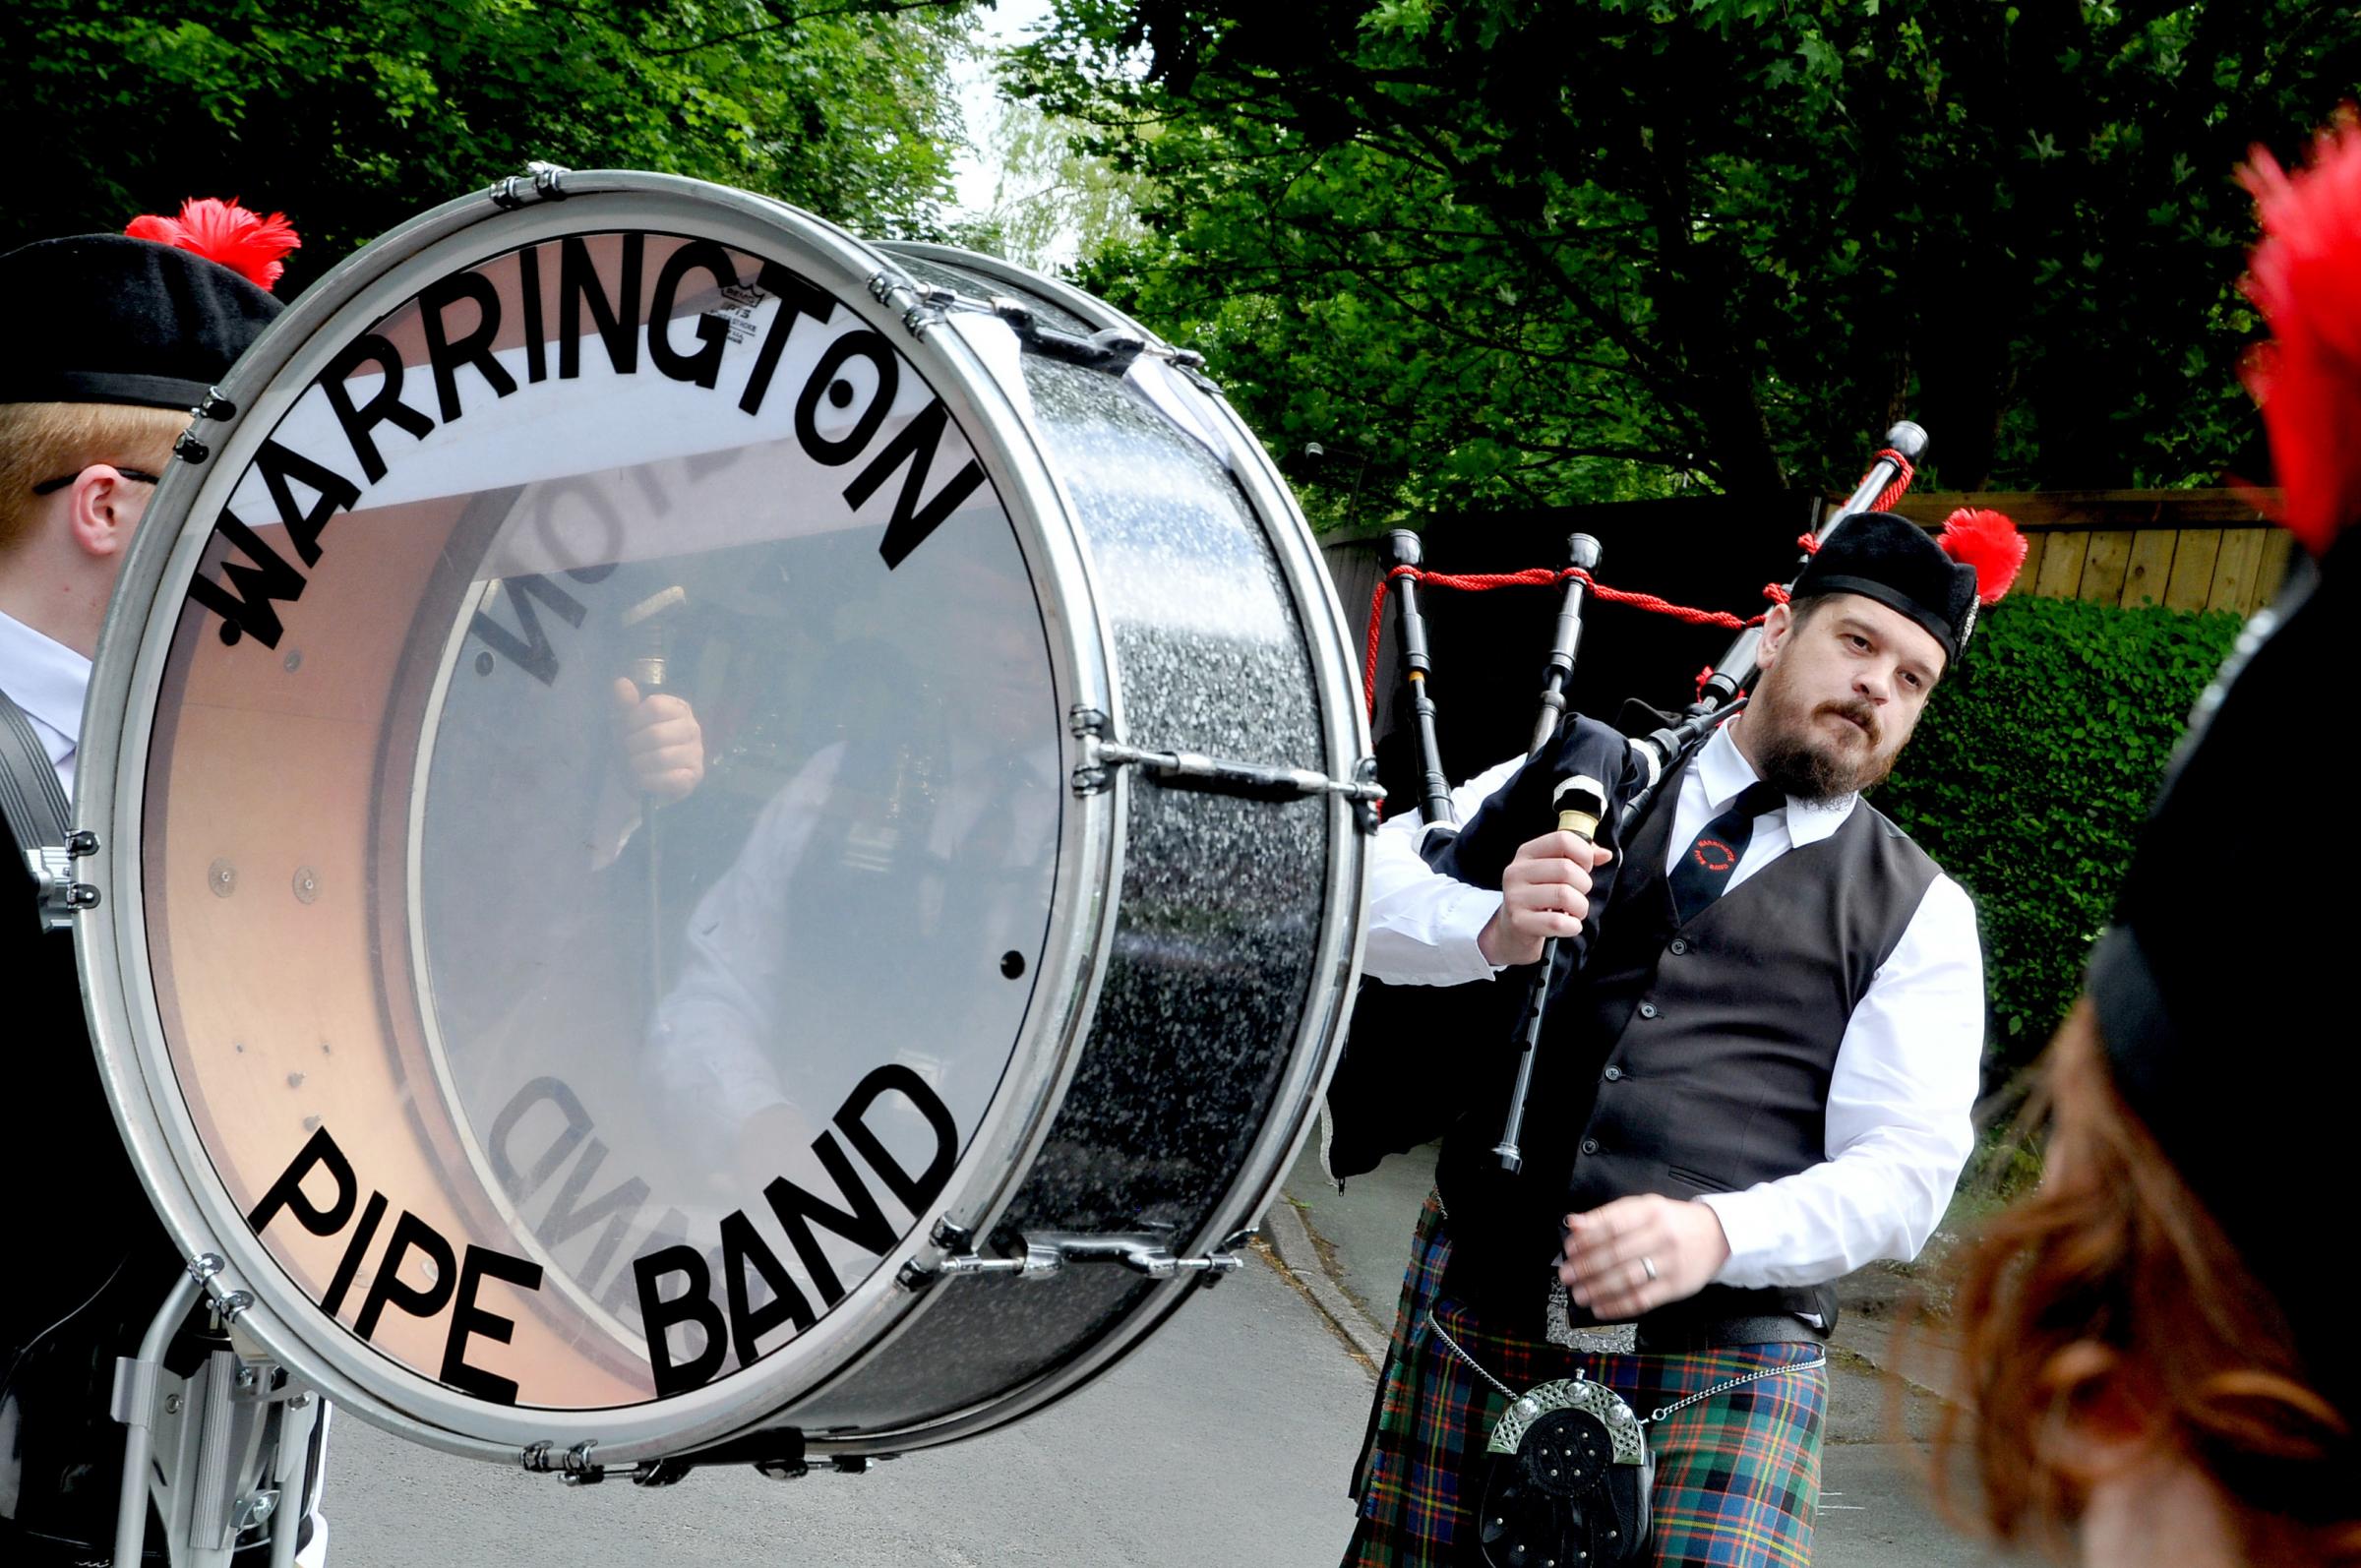 Warrington Pipe Band were in attendance